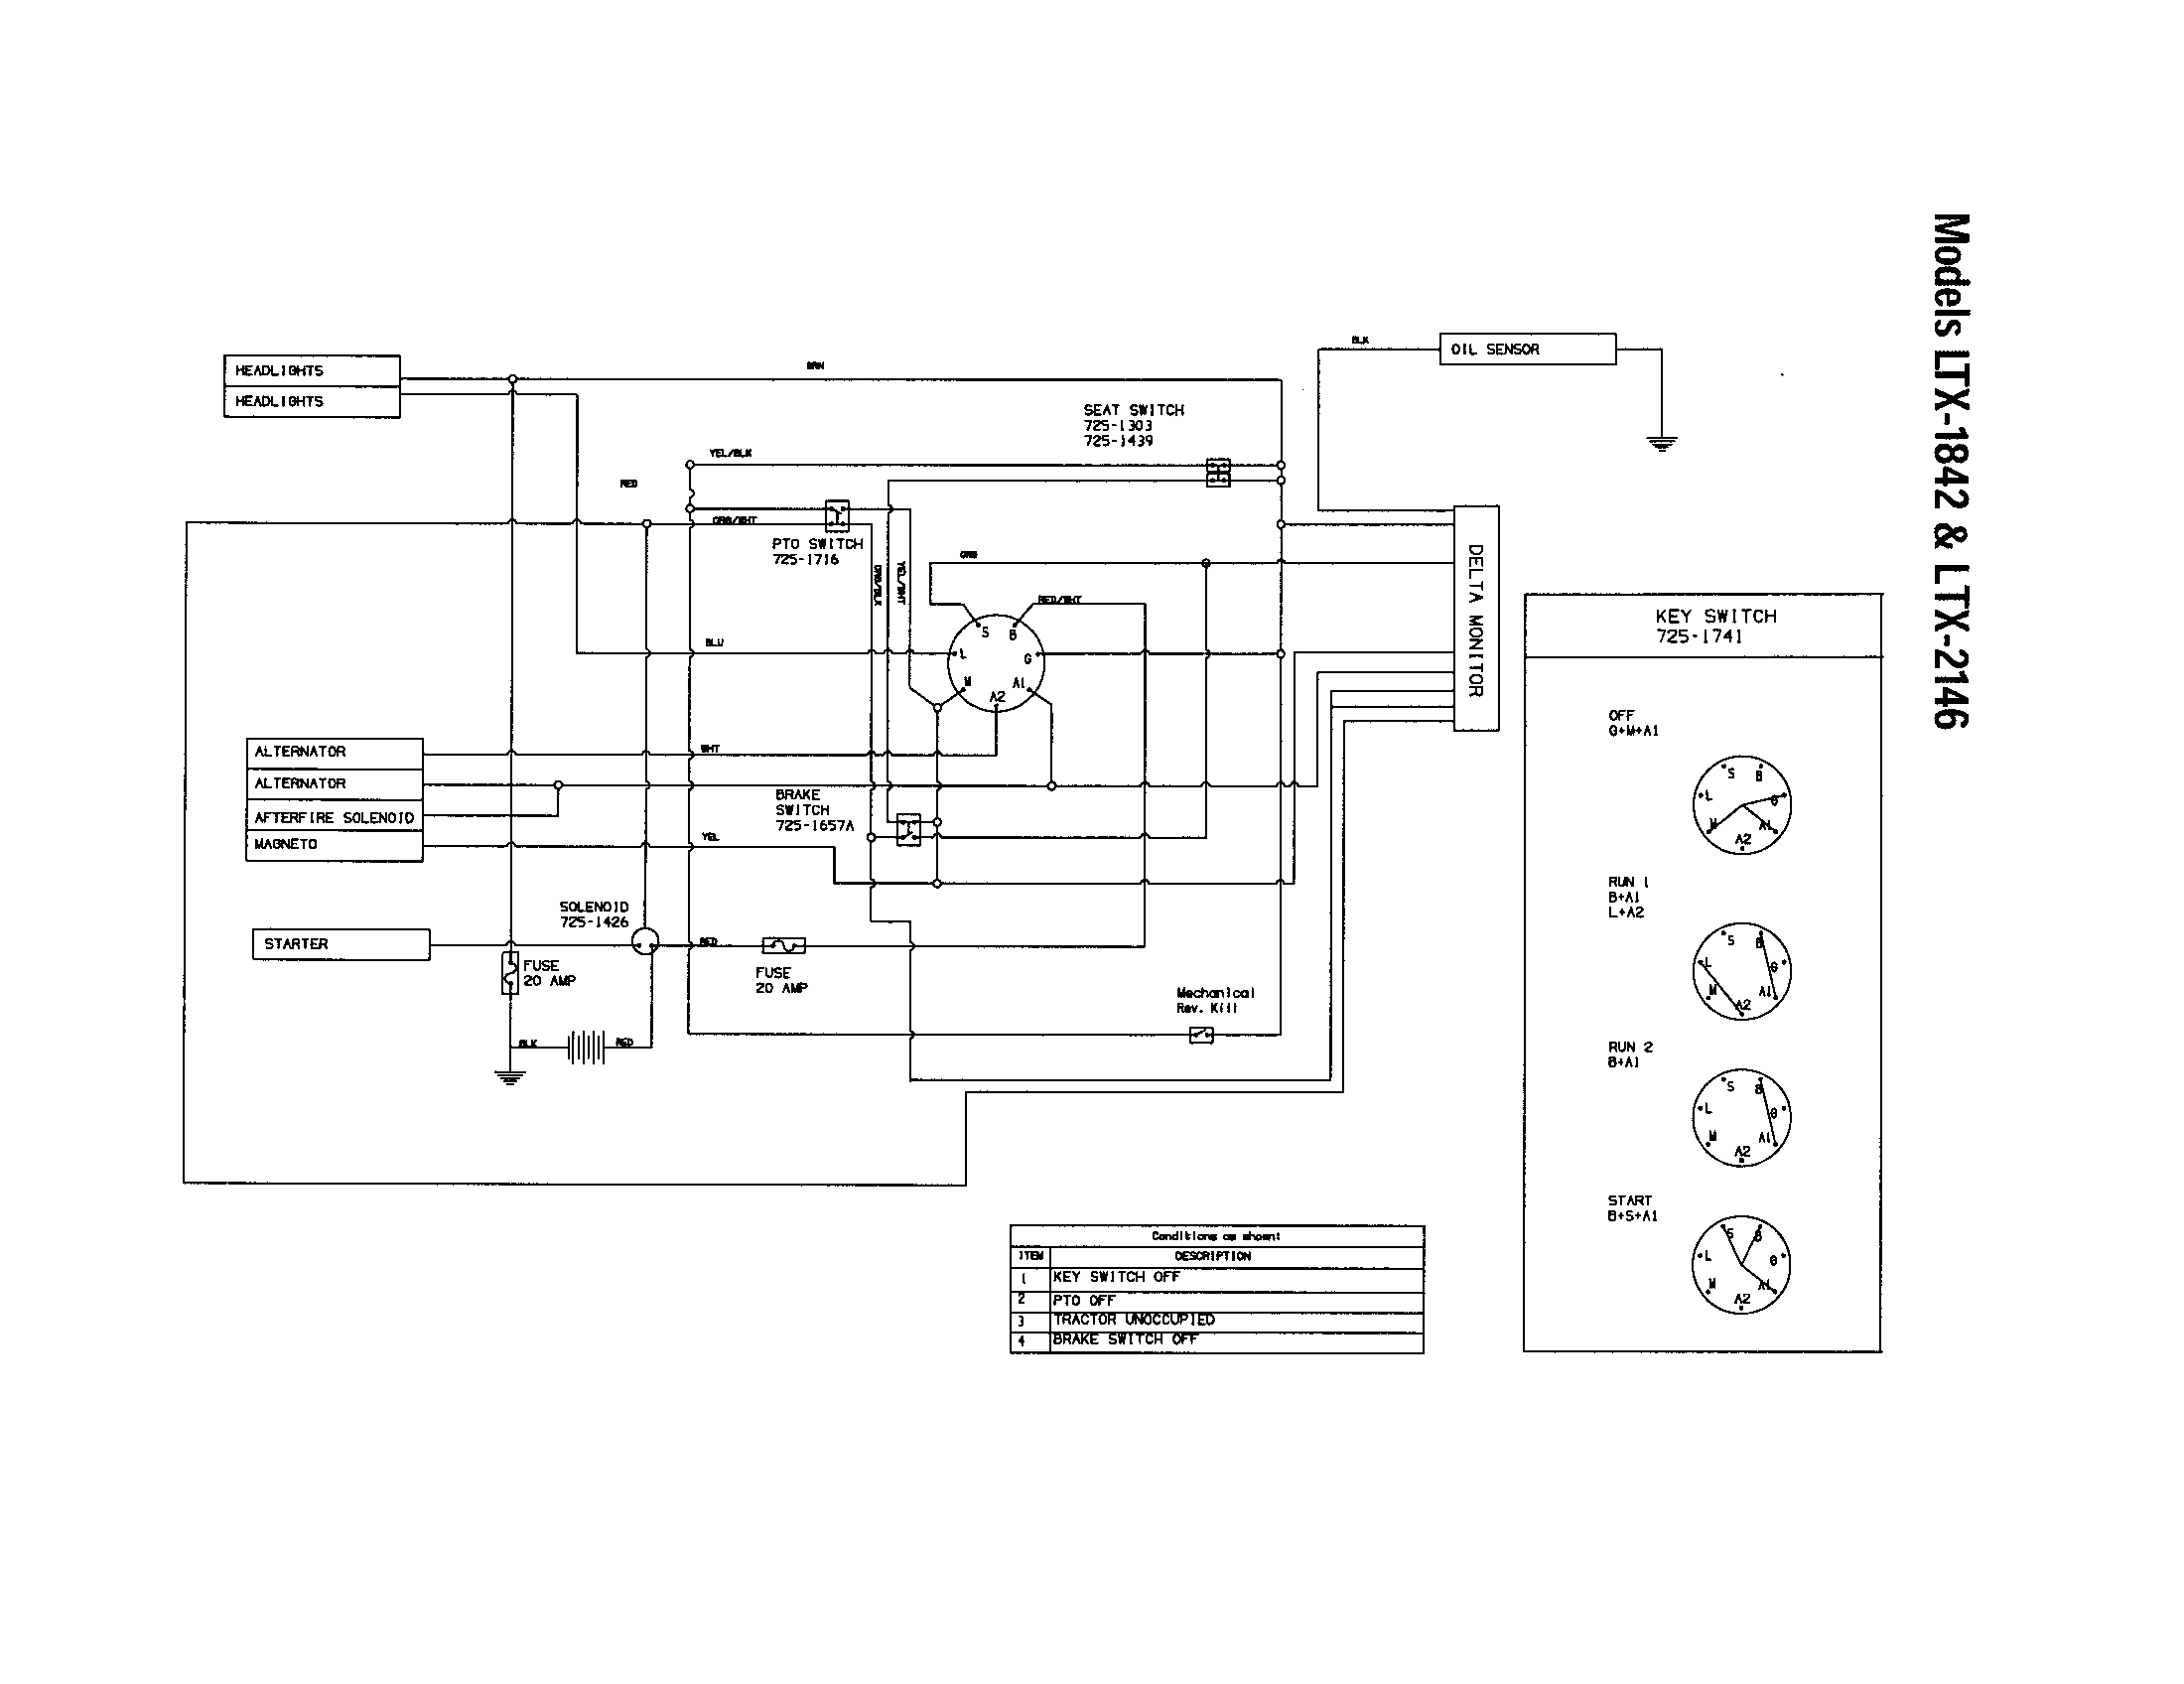 master bilt blg-74hd wiring diagram